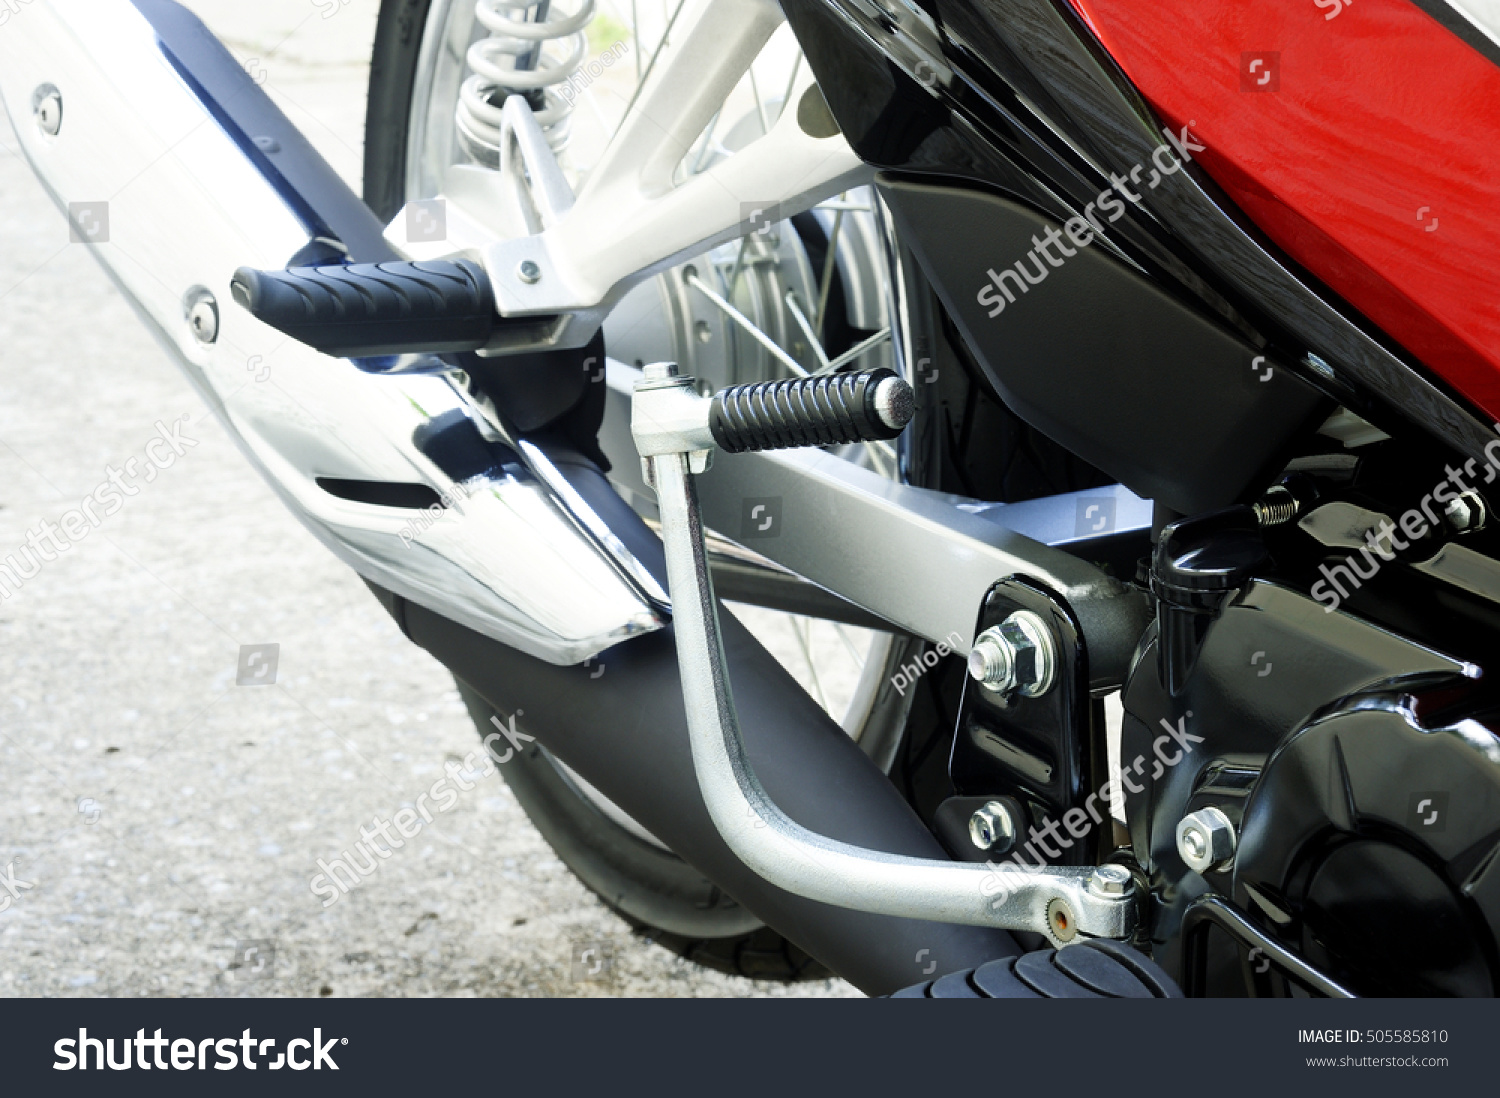 208 Kick To Start Motorcycle Images, Stock Photos & Vectors | Shutterstock